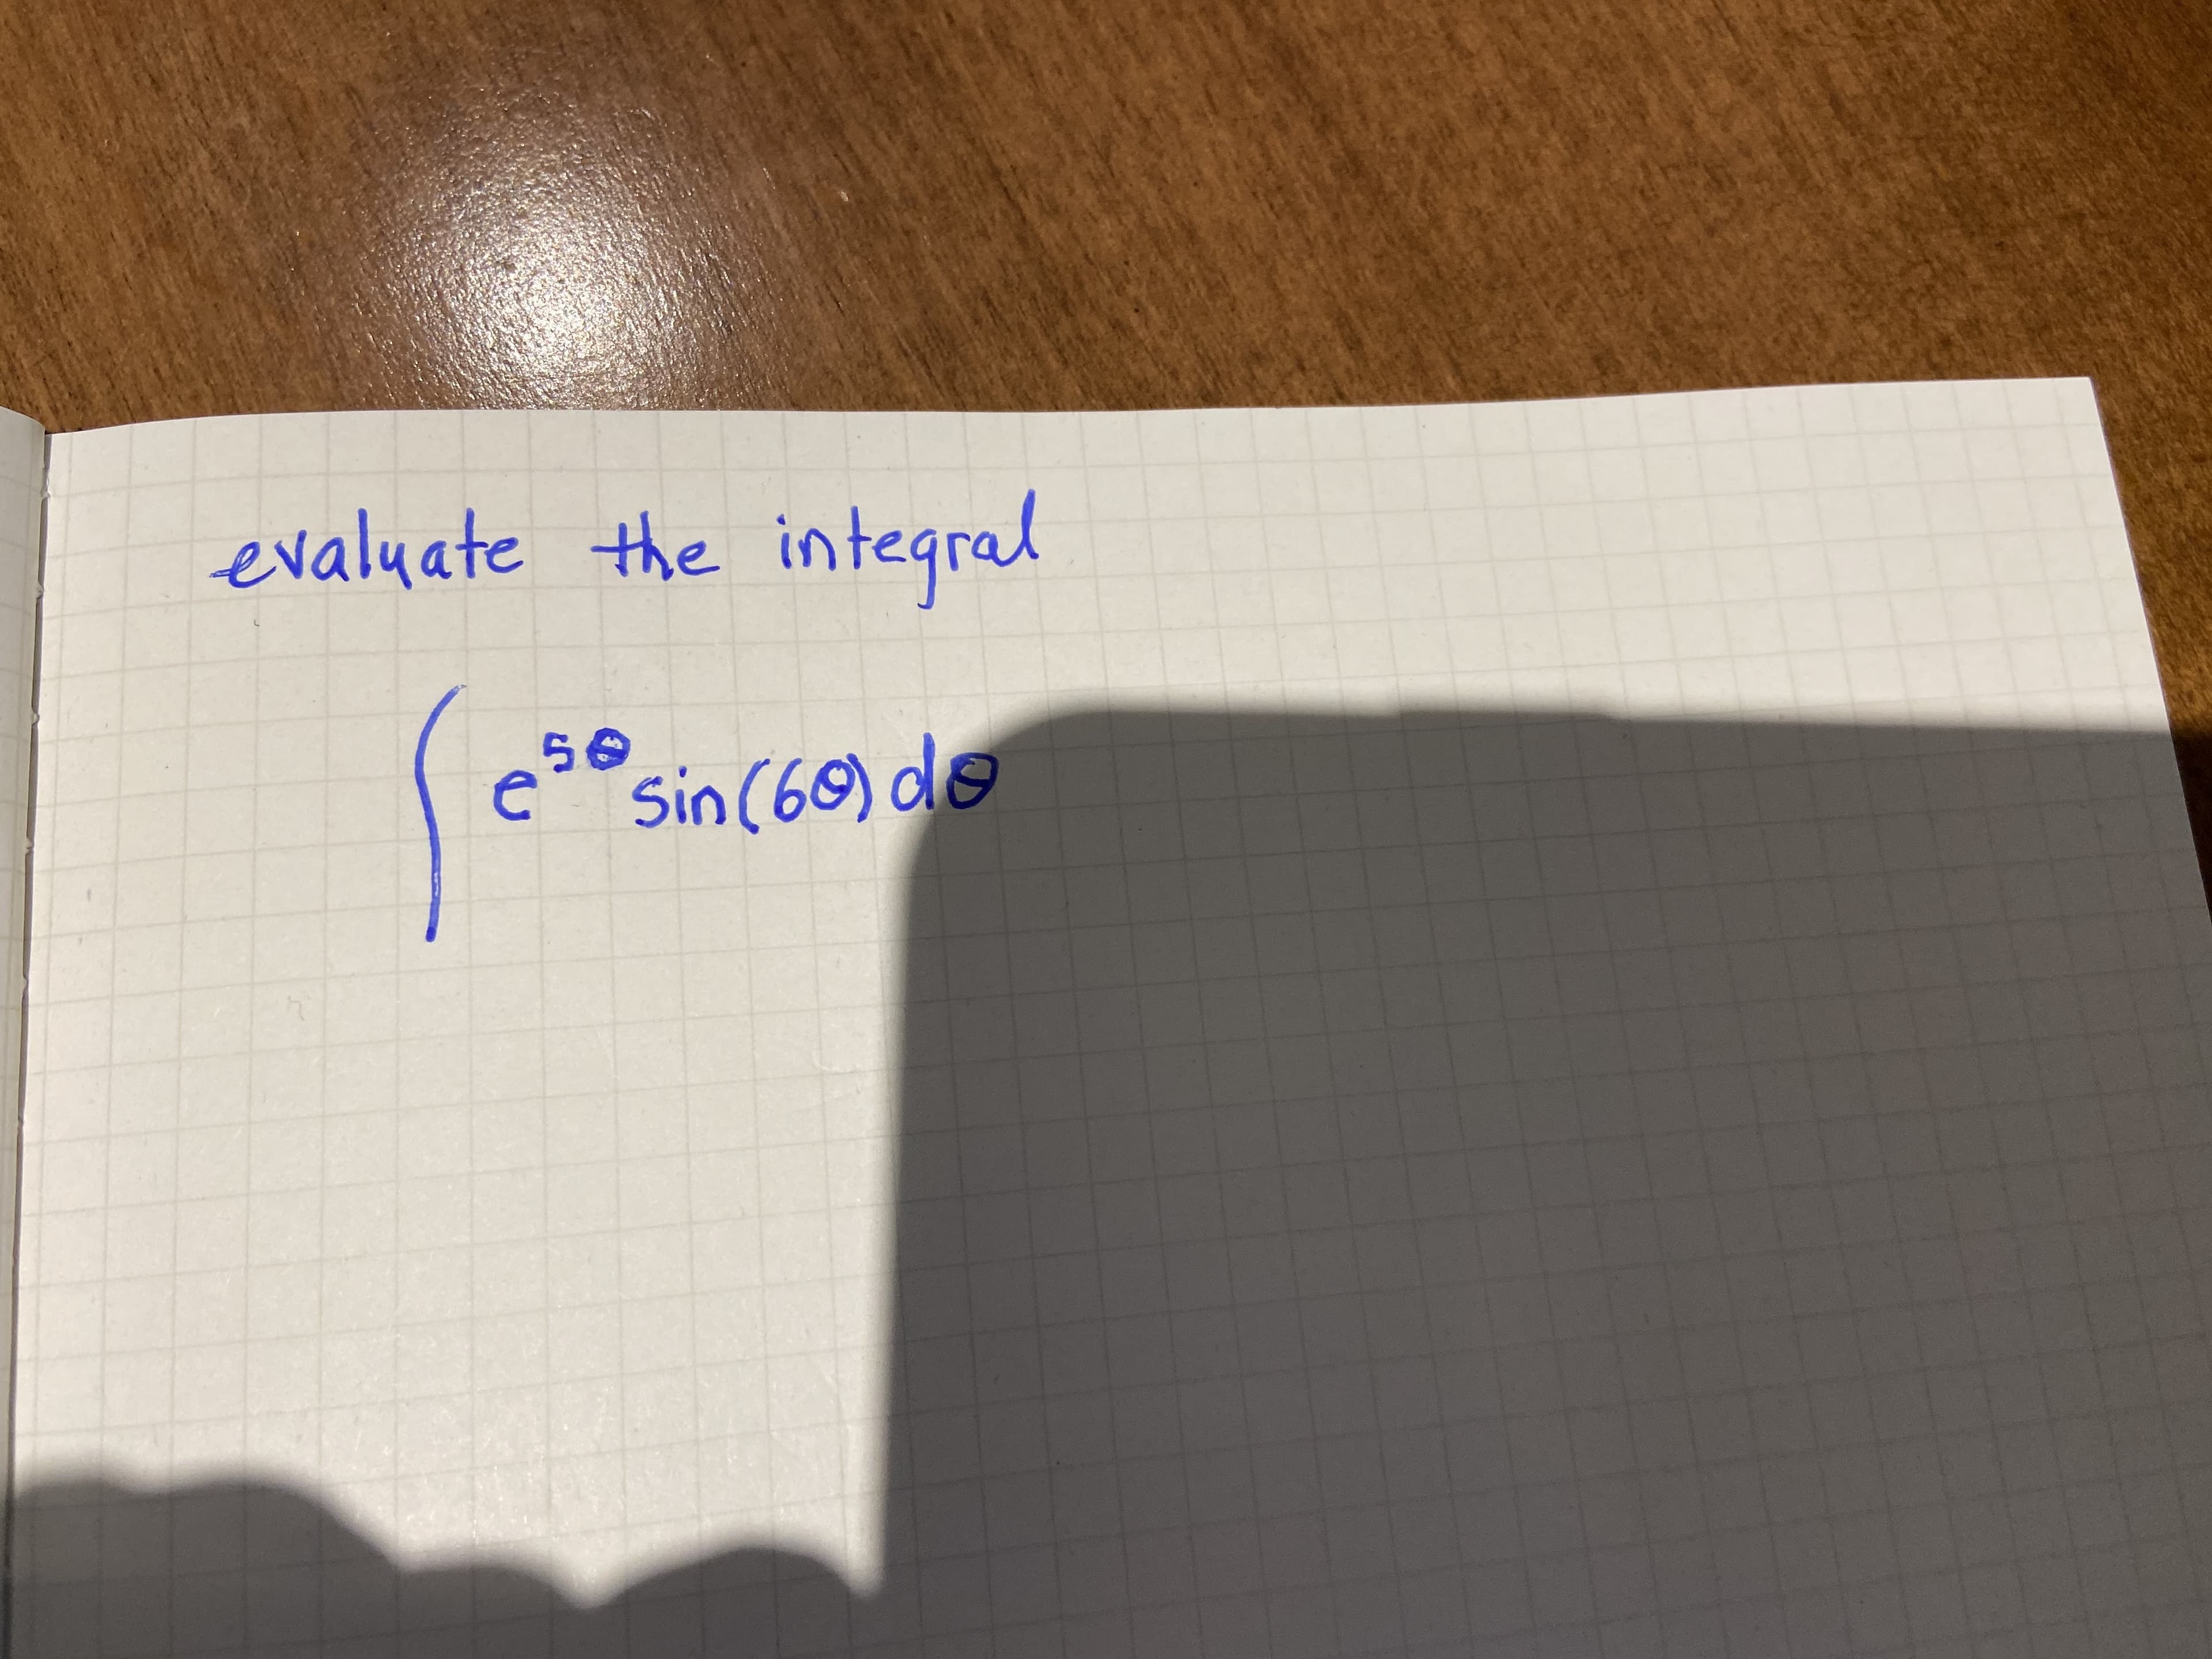 evaluate the integral
60
eSin (60) de
